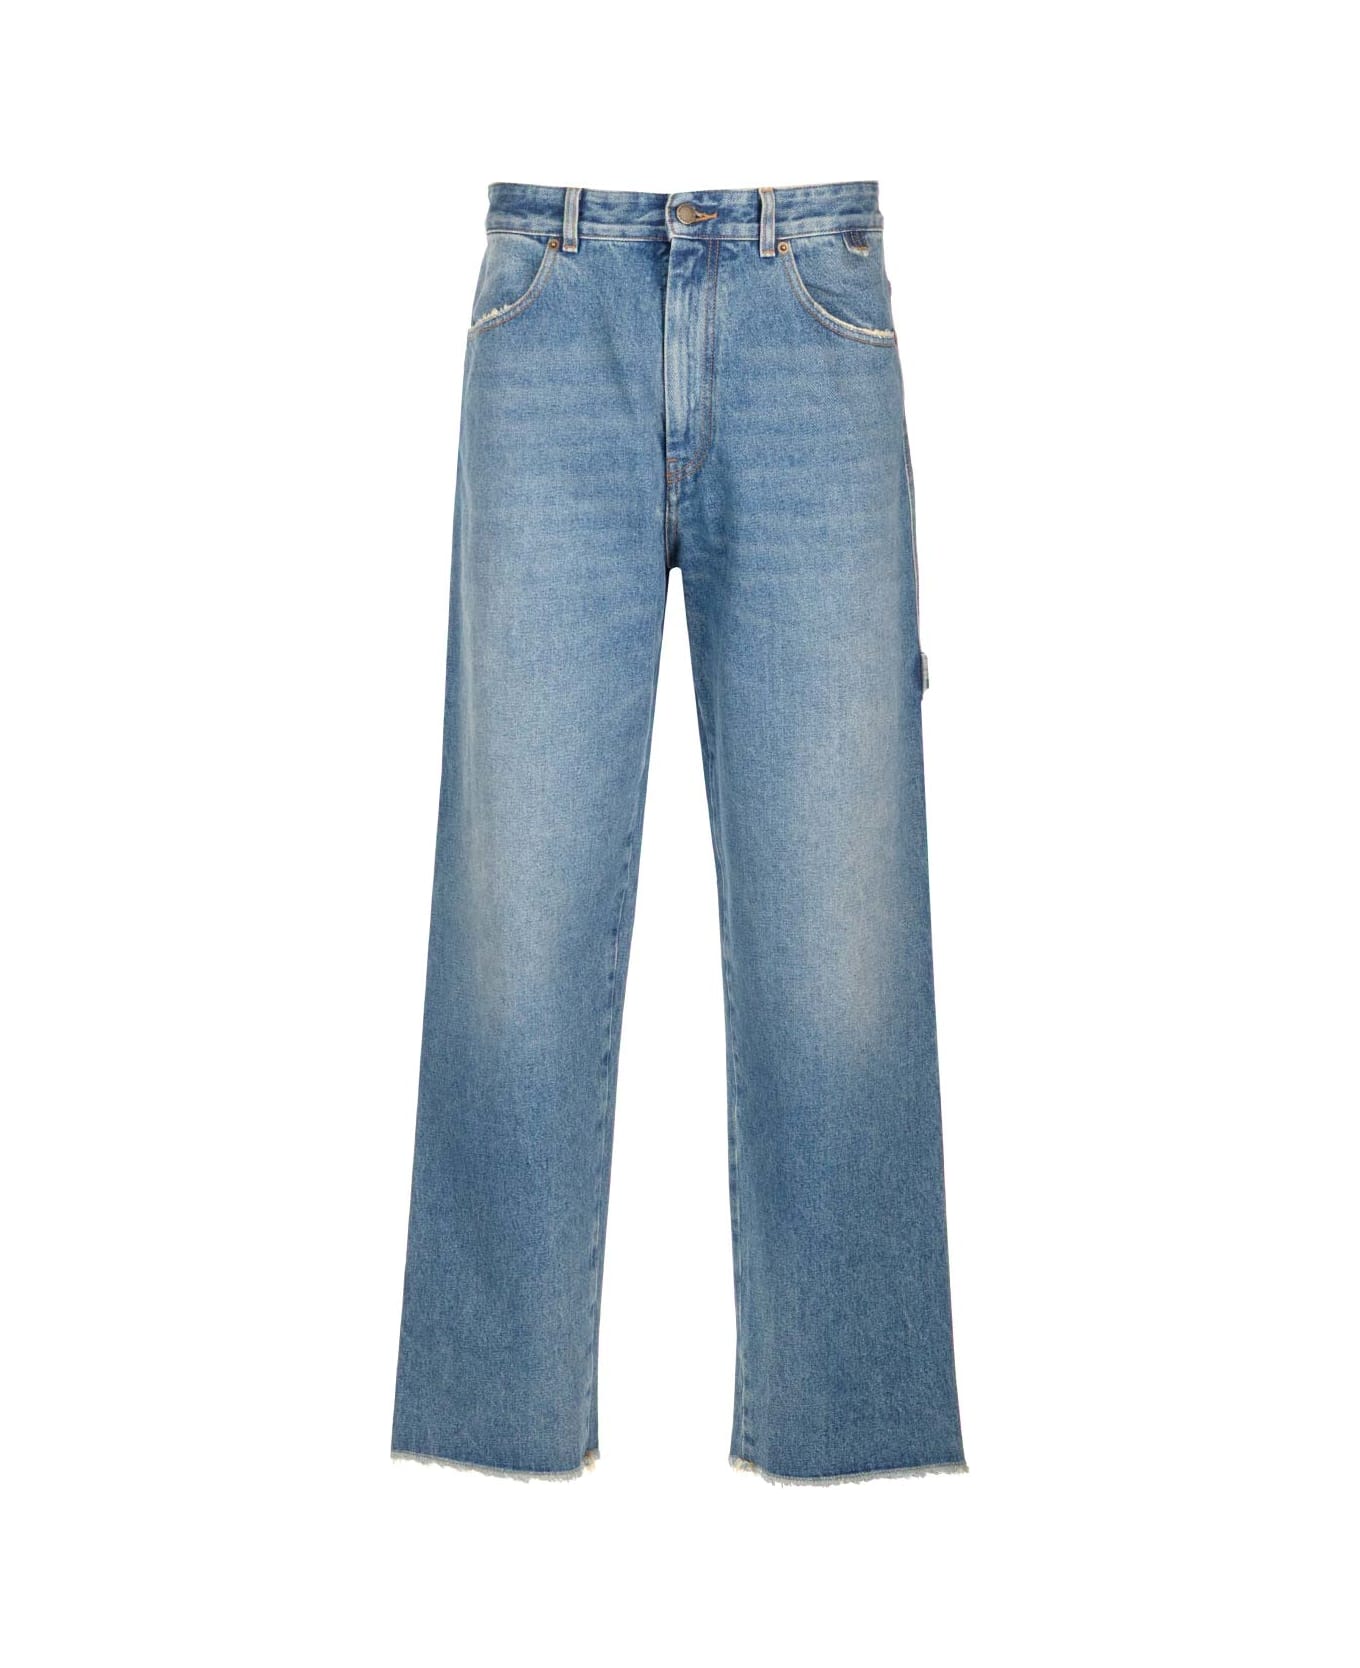 DARKPARK 'john' Carpenter Jeans - Medium Wash デニム